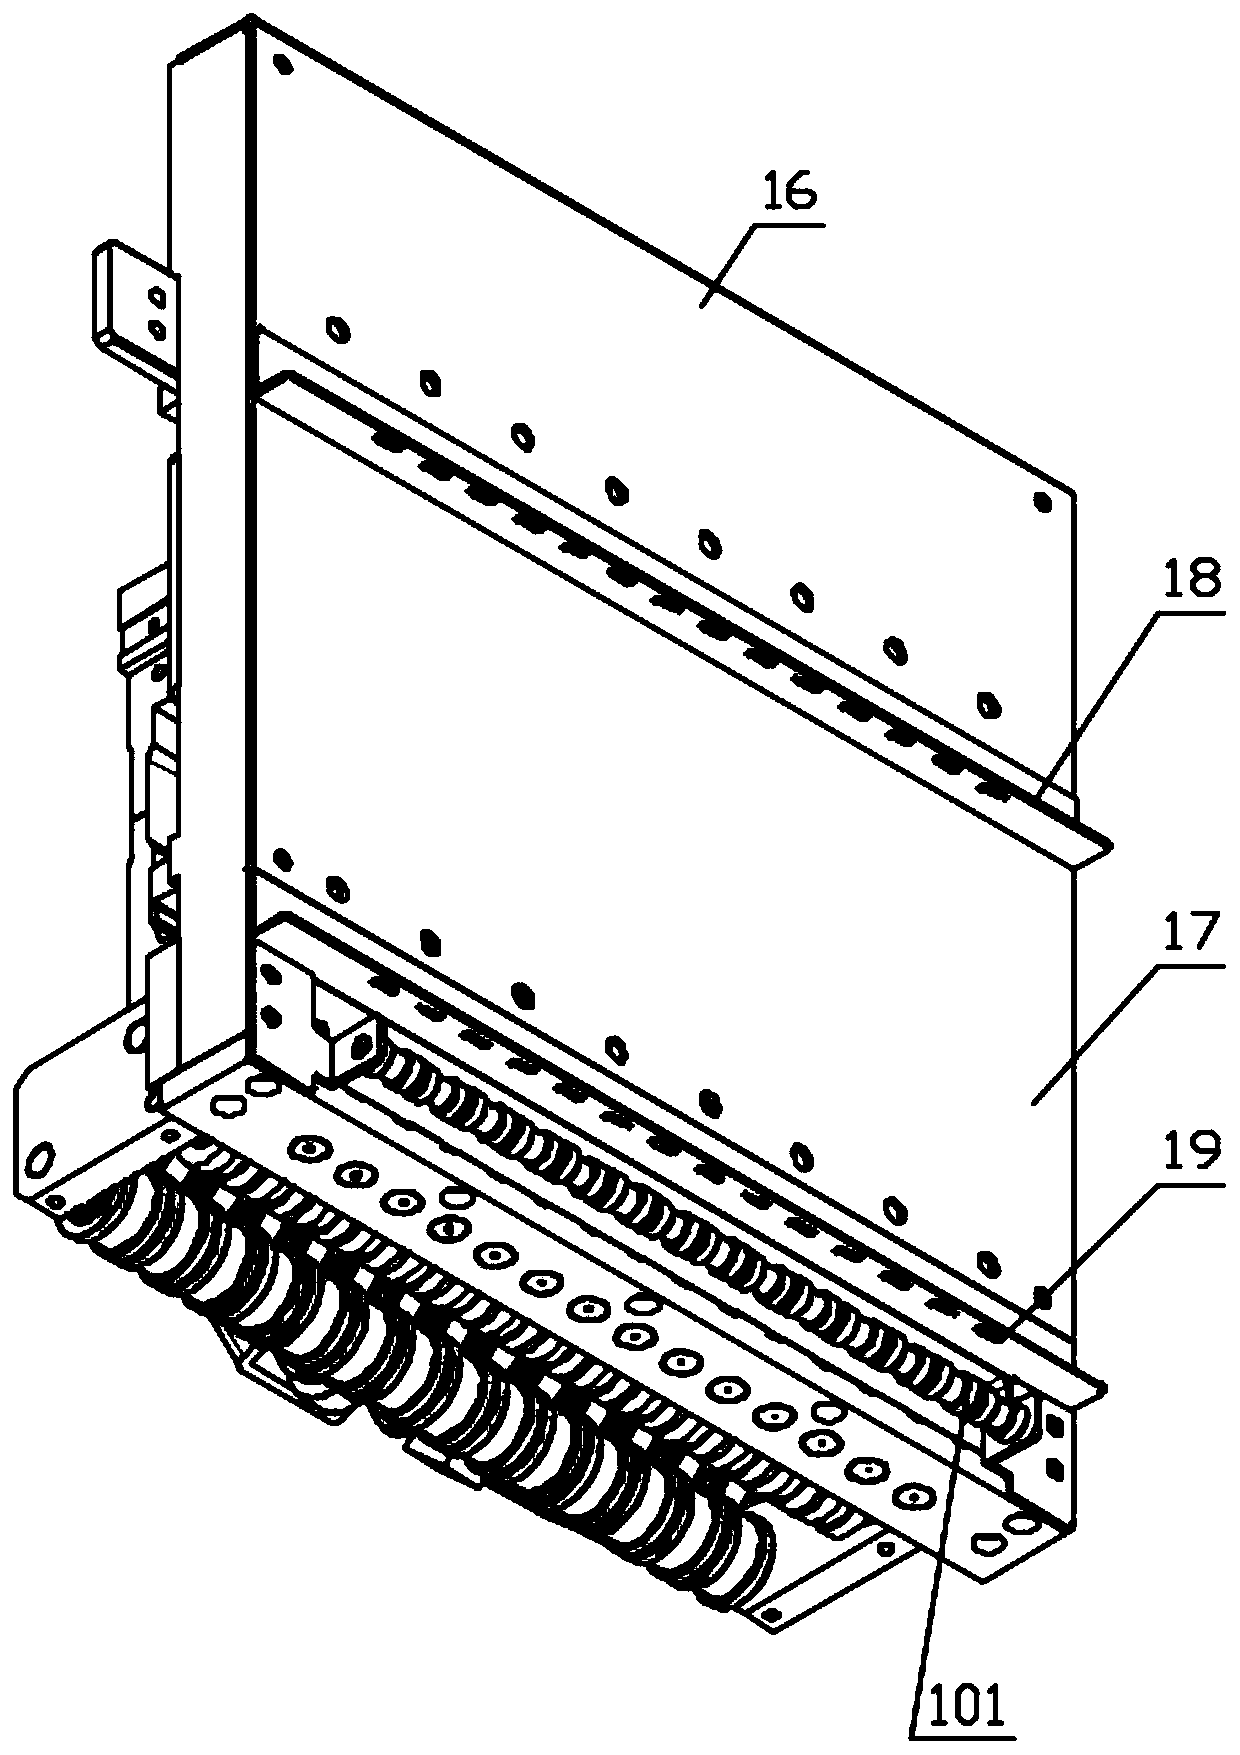 Panel pressing machine handpiece for multicolor panel pressing and panel pressing machine